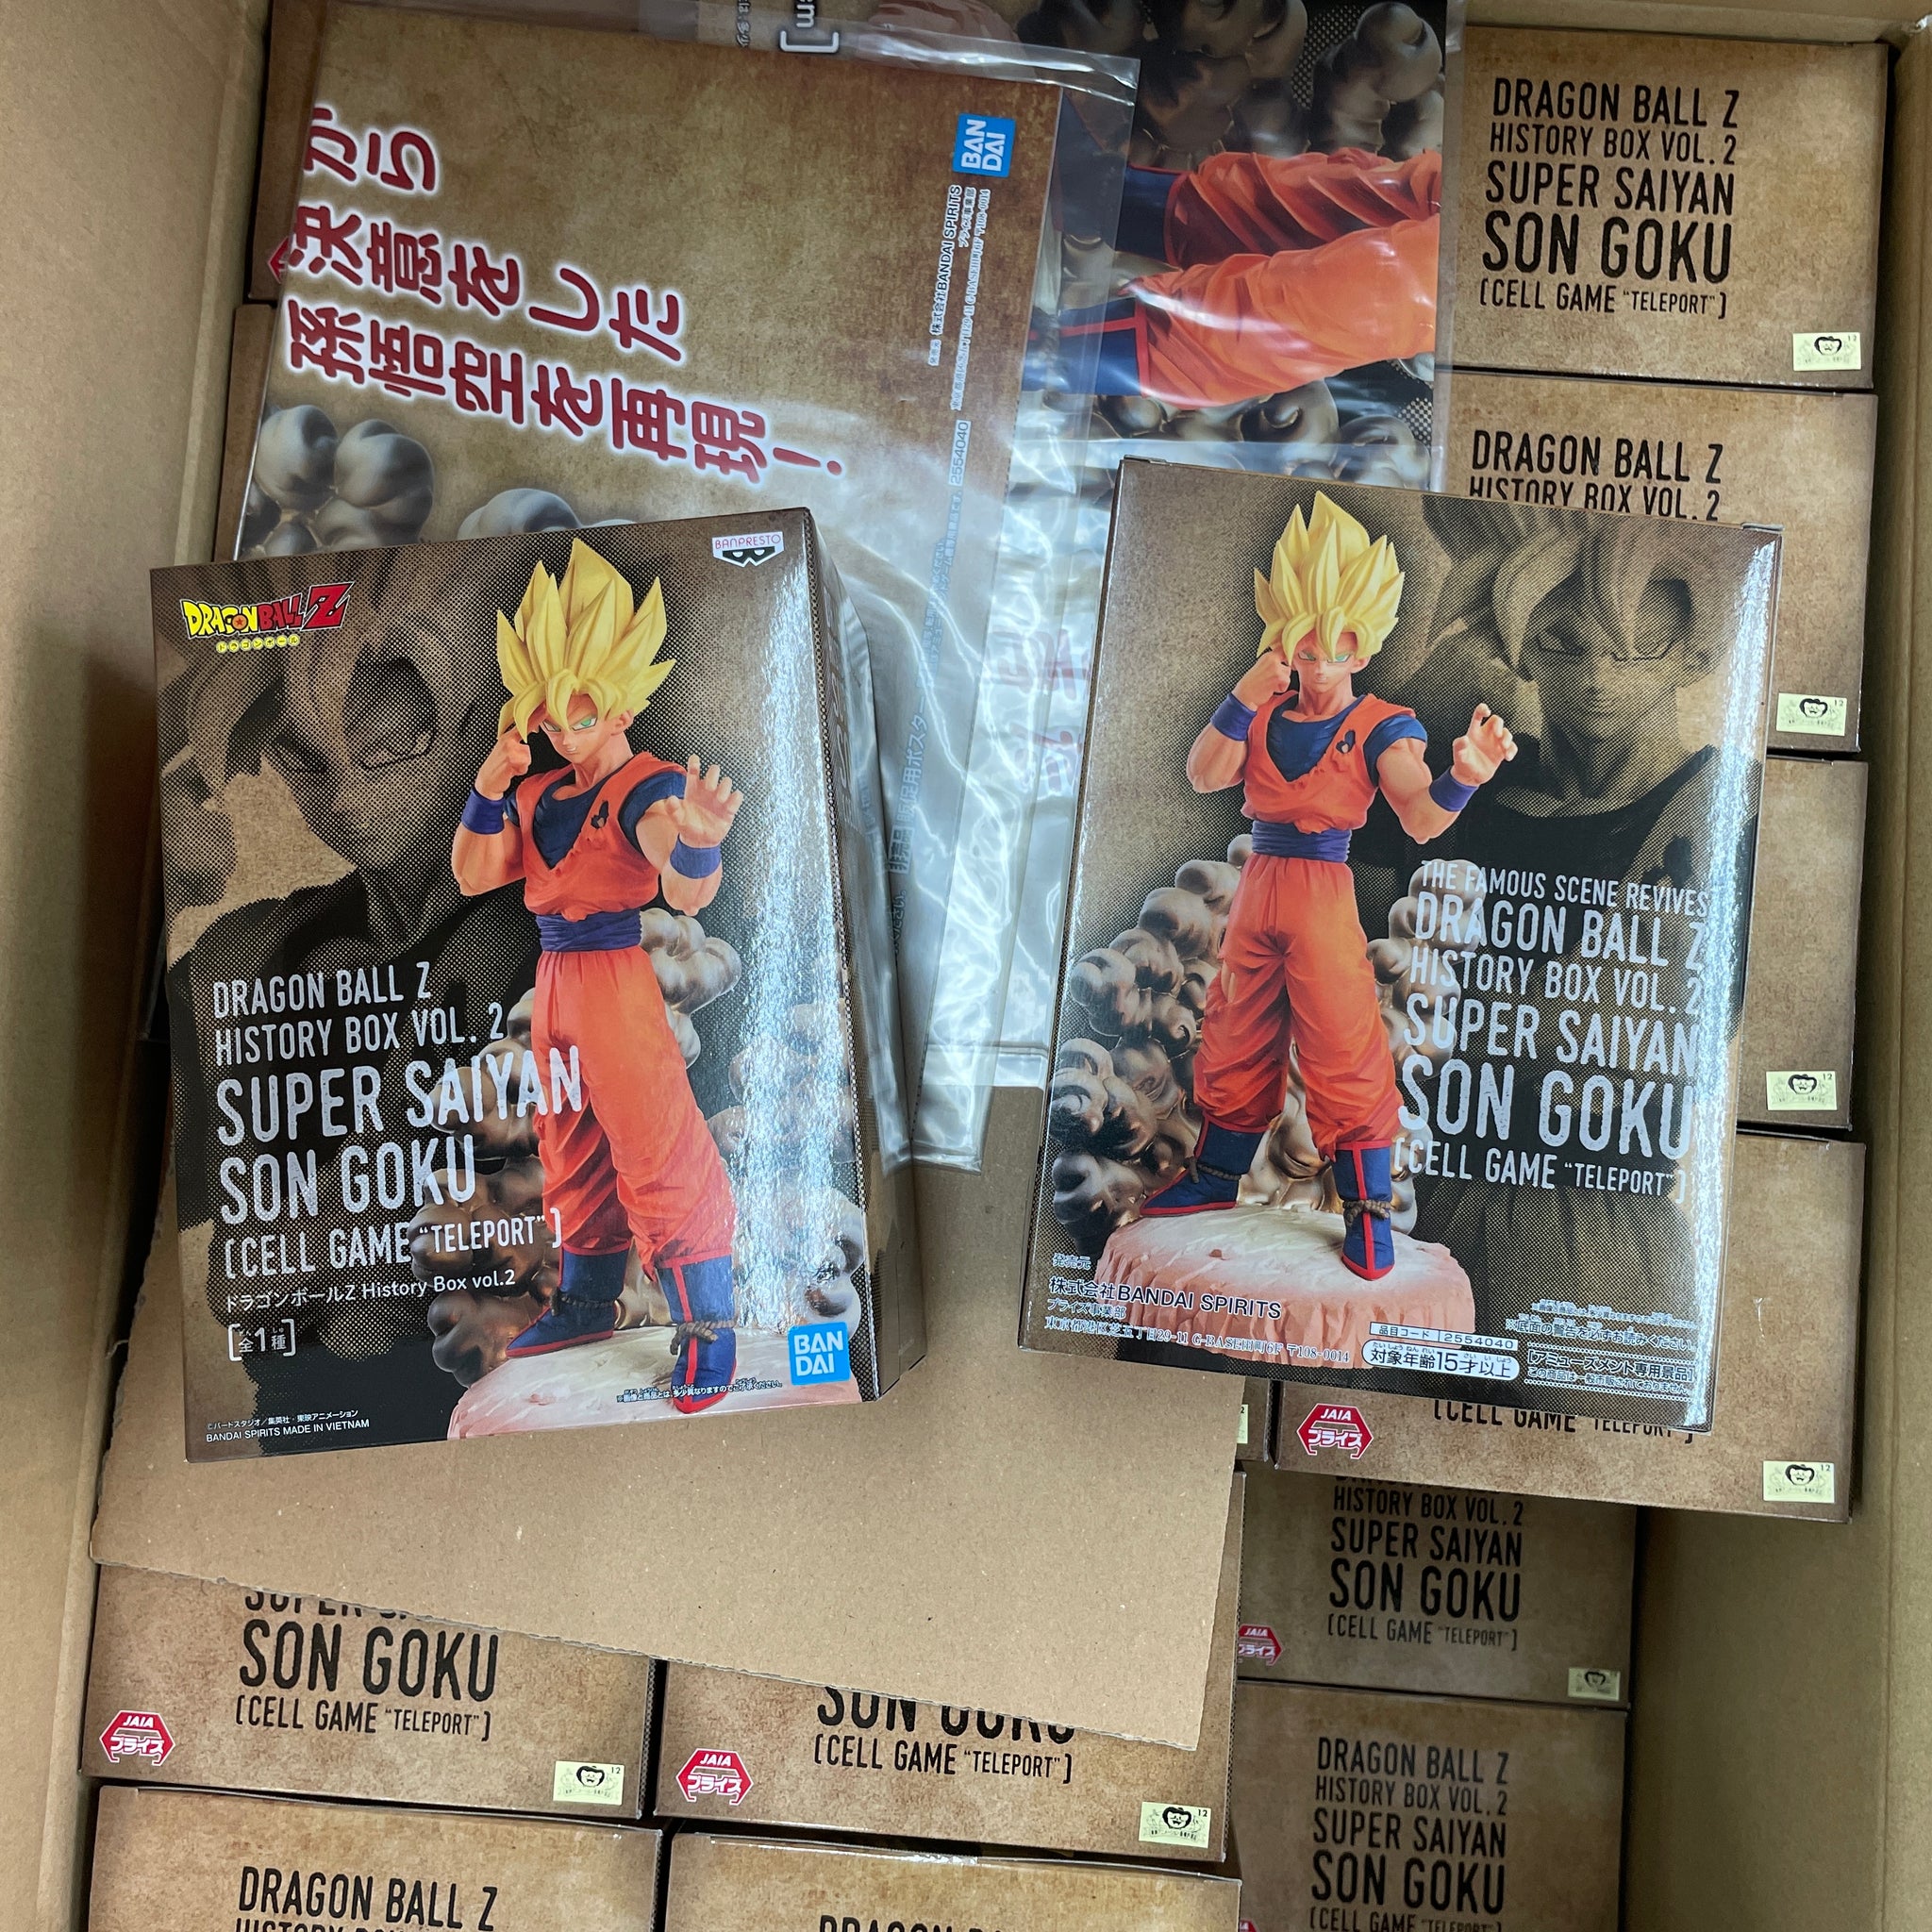 Banpresto Dragon Ball Z History Box Vol. 2 Super Saiyan Goku